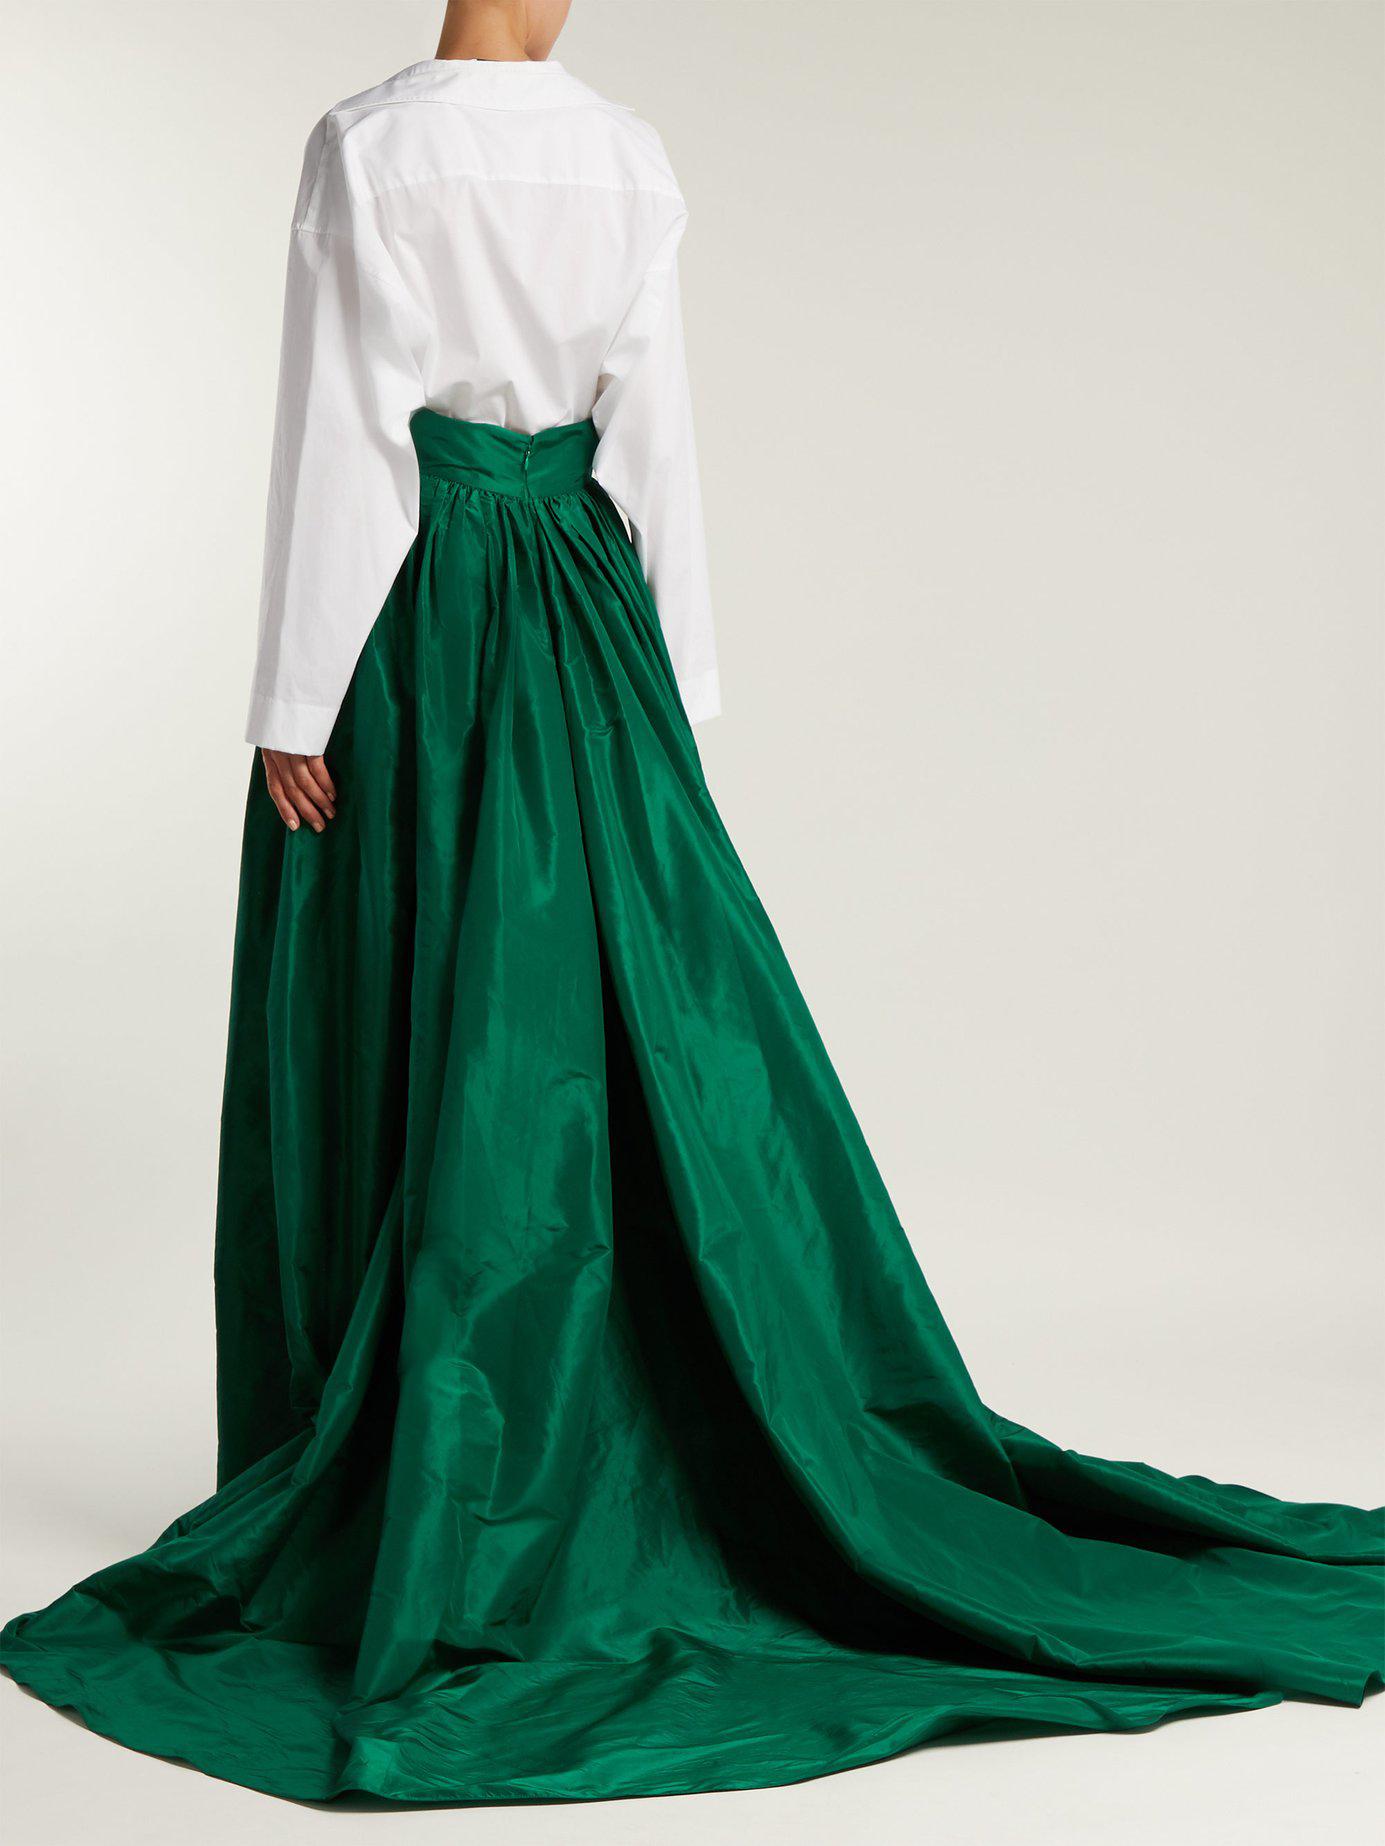 Carolina Herrera High Rise Silk Taffeta Ball Gown Skirt in Green - Lyst